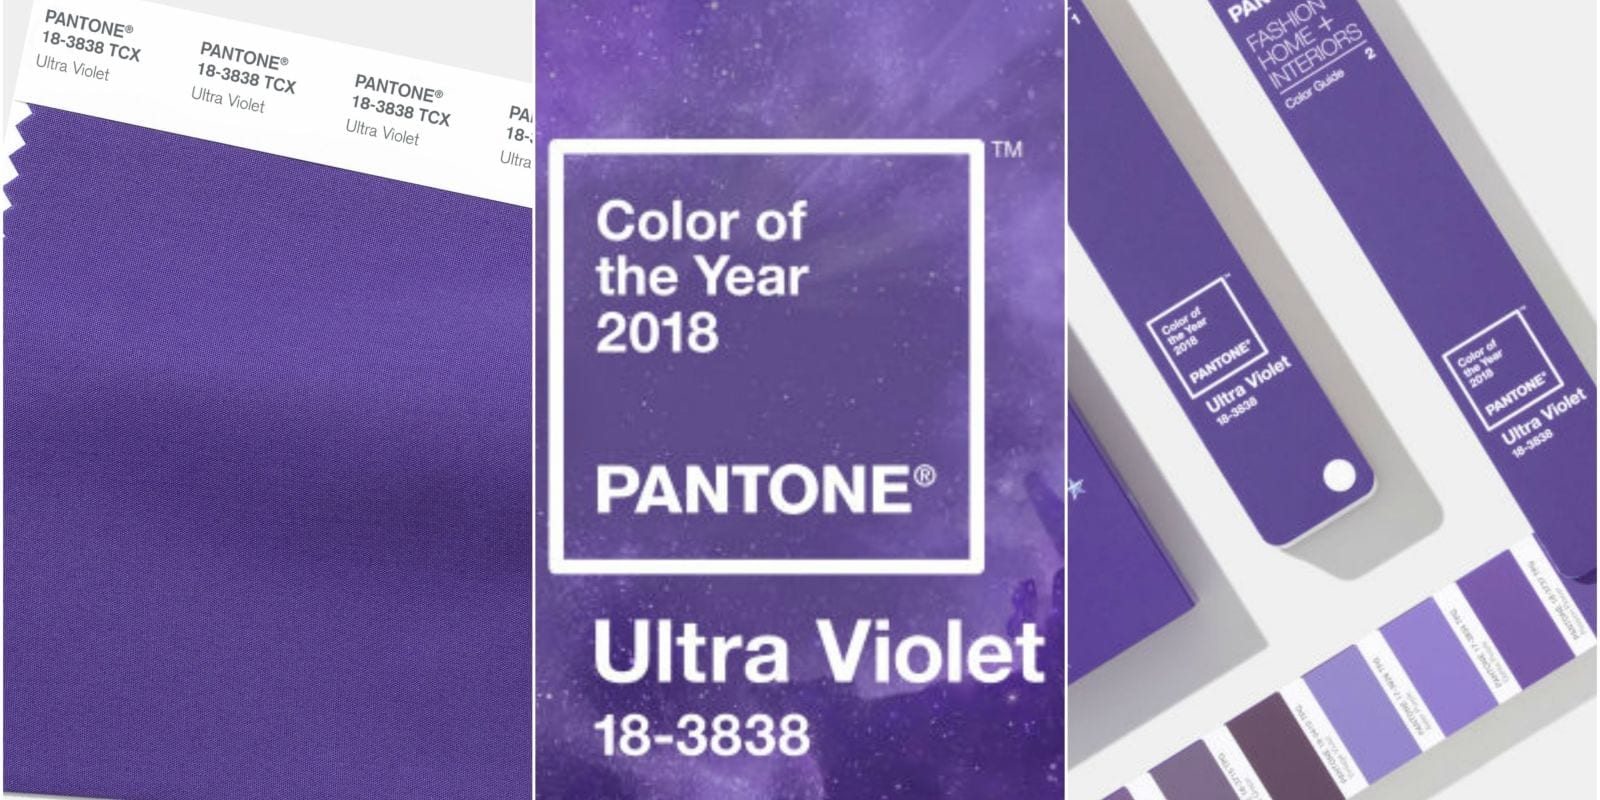 Onze Pantone Ultra Violet Keuze Asters Royal Van Zanten Coloring Wallpapers Download Free Images Wallpaper [coloring436.blogspot.com]